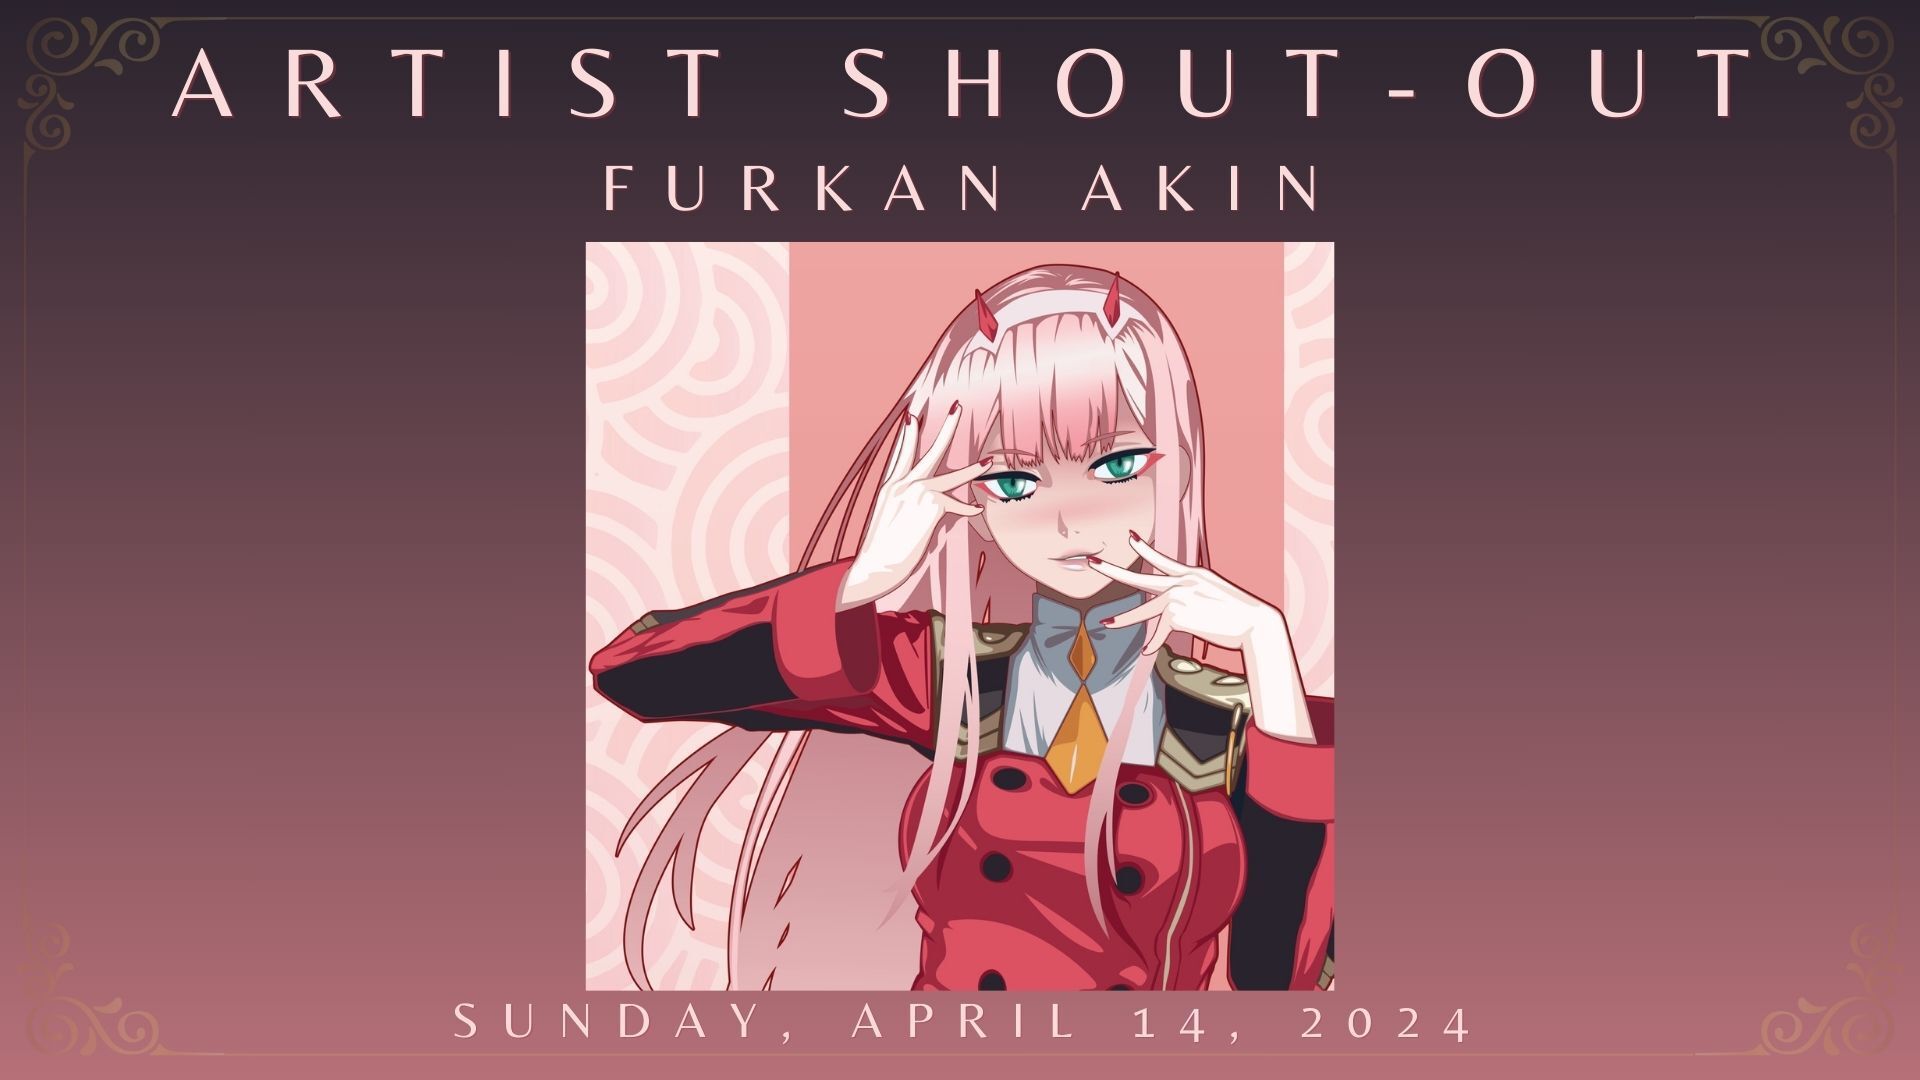 ARTIST SHOUT-OUT: Sunday, April 14, 2024